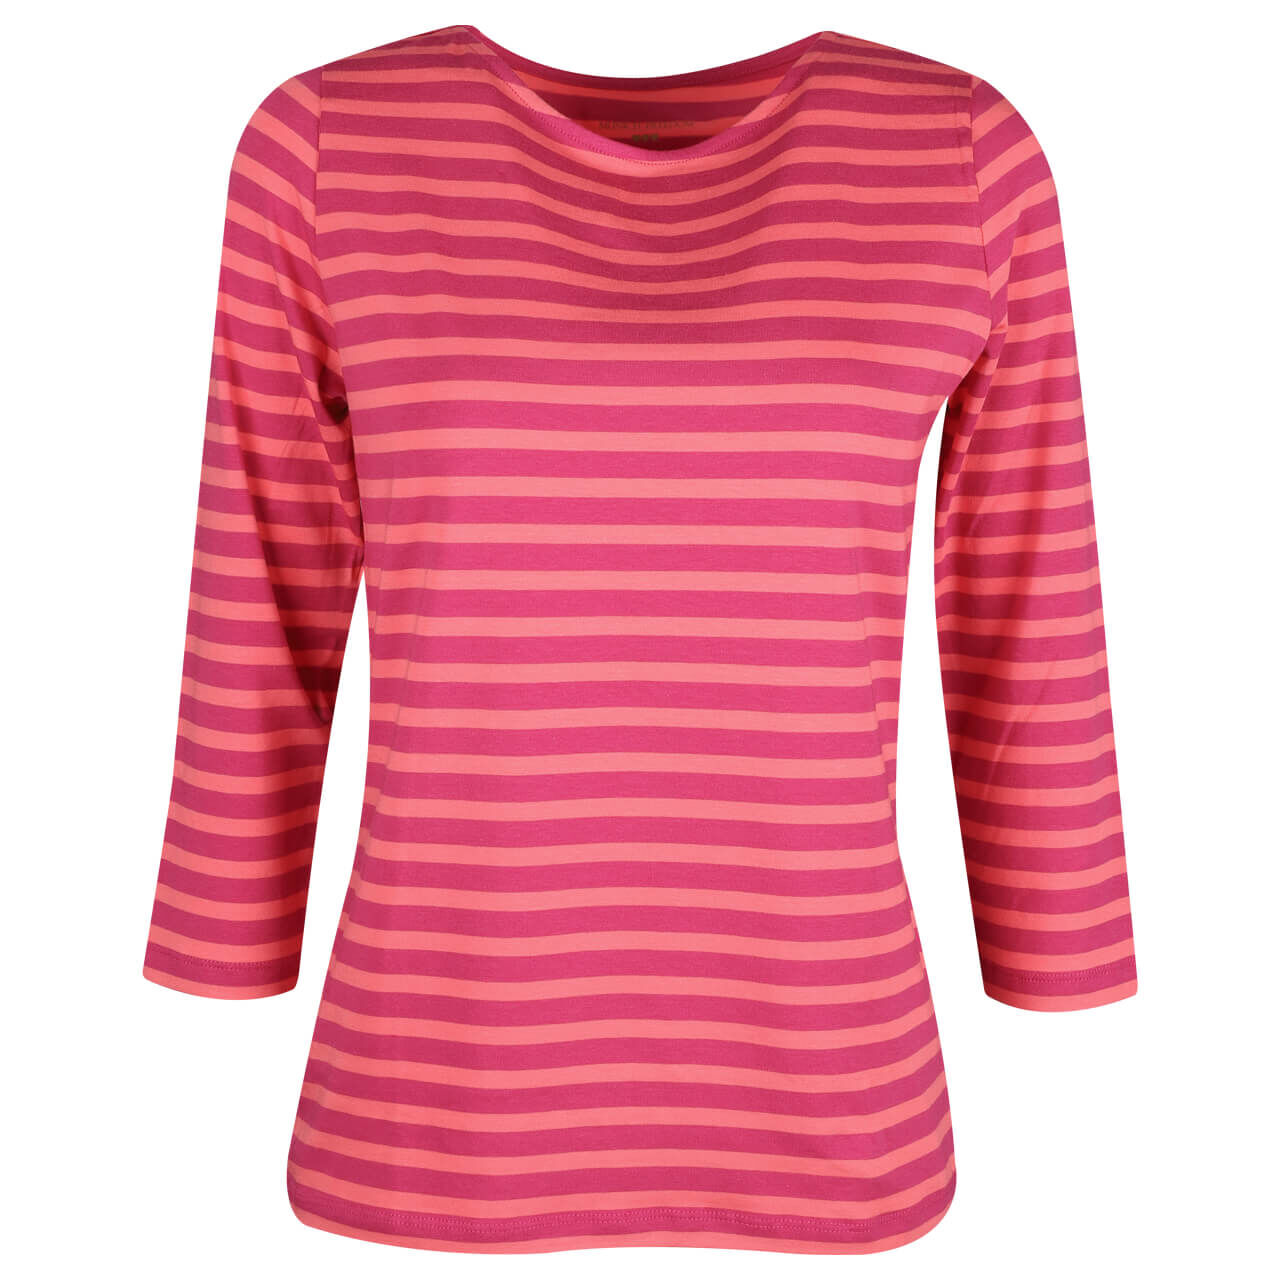 Munich Freedom Damen 3/4 Arm Shirt pink/coral